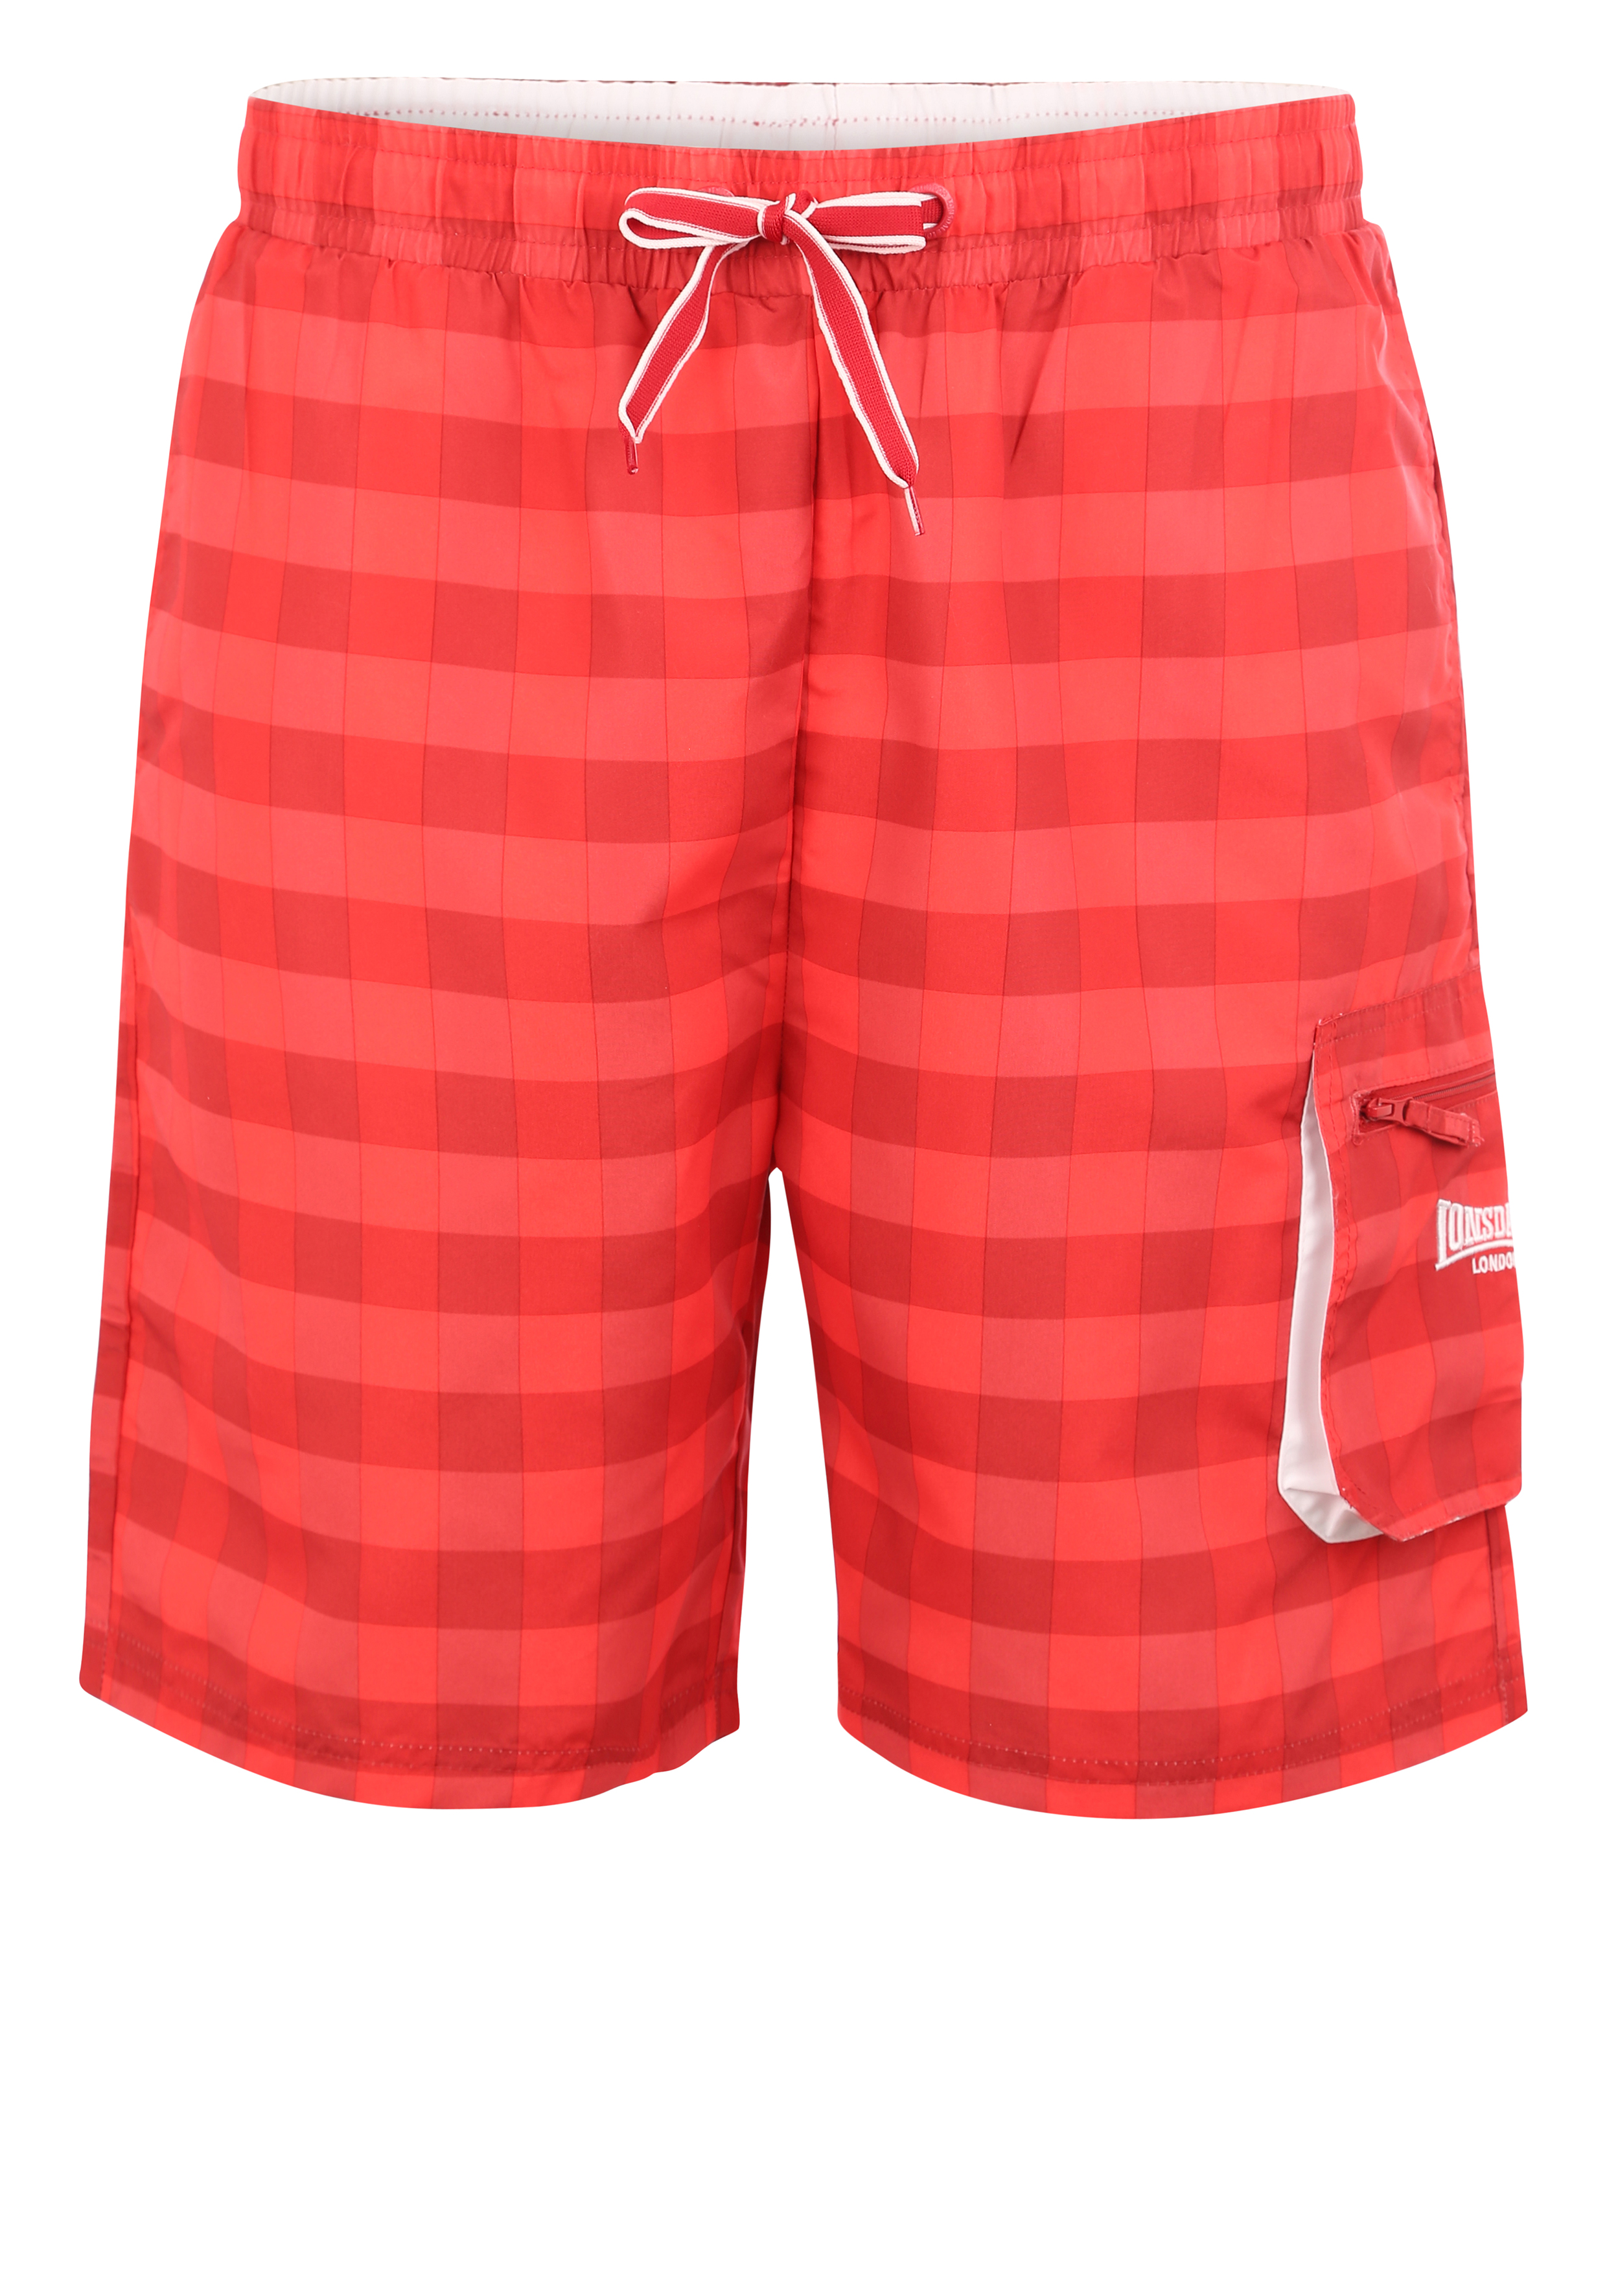 Lonsdale Men's beach shortsn regular fit